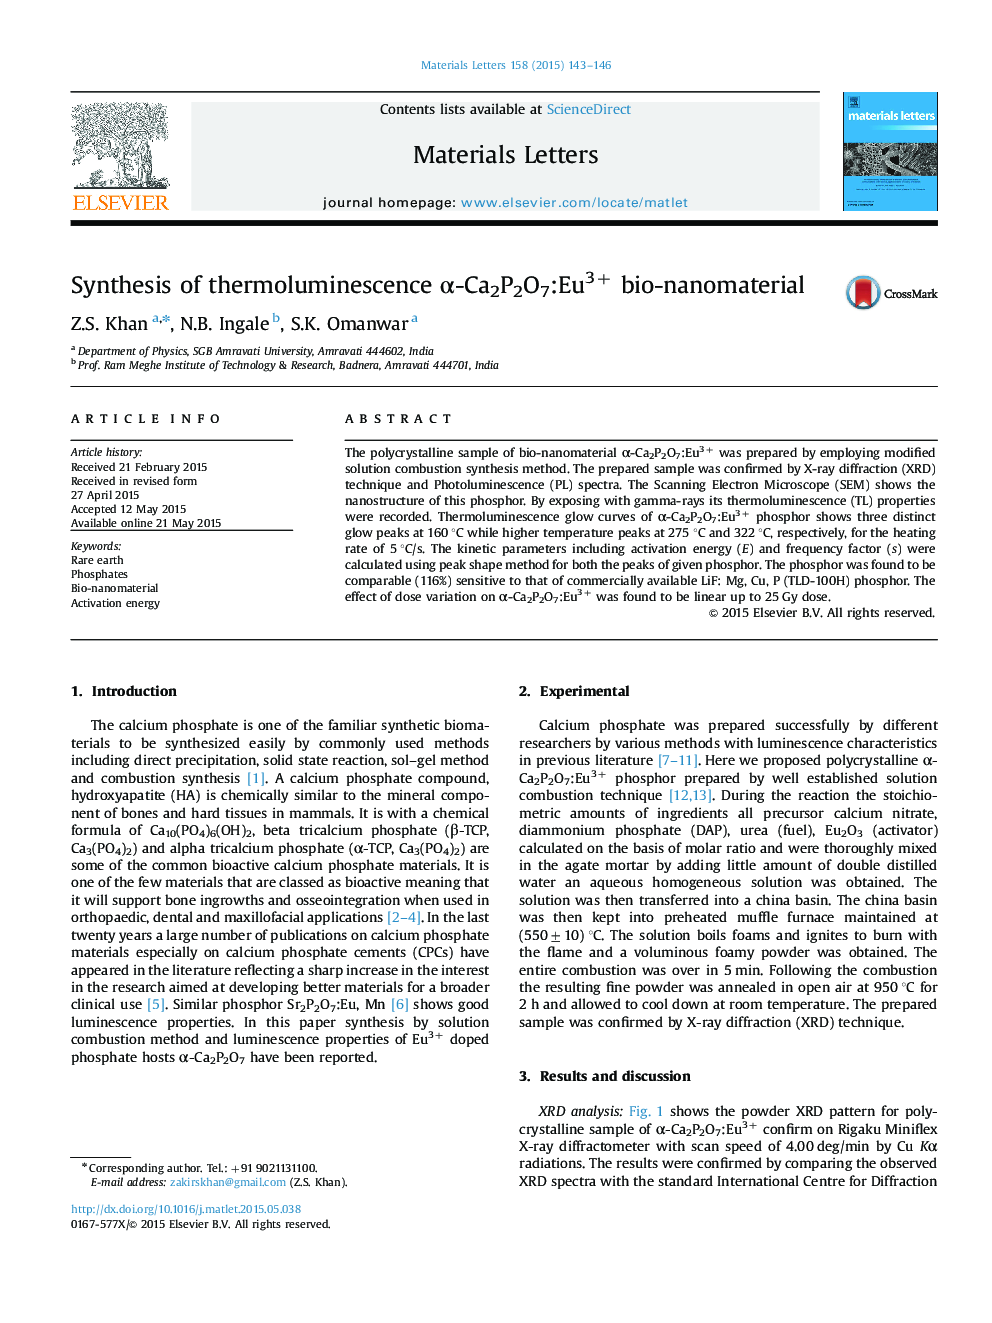 Synthesis of thermoluminescence α-Ca2P2O7:Eu3+ bio-nanomaterial